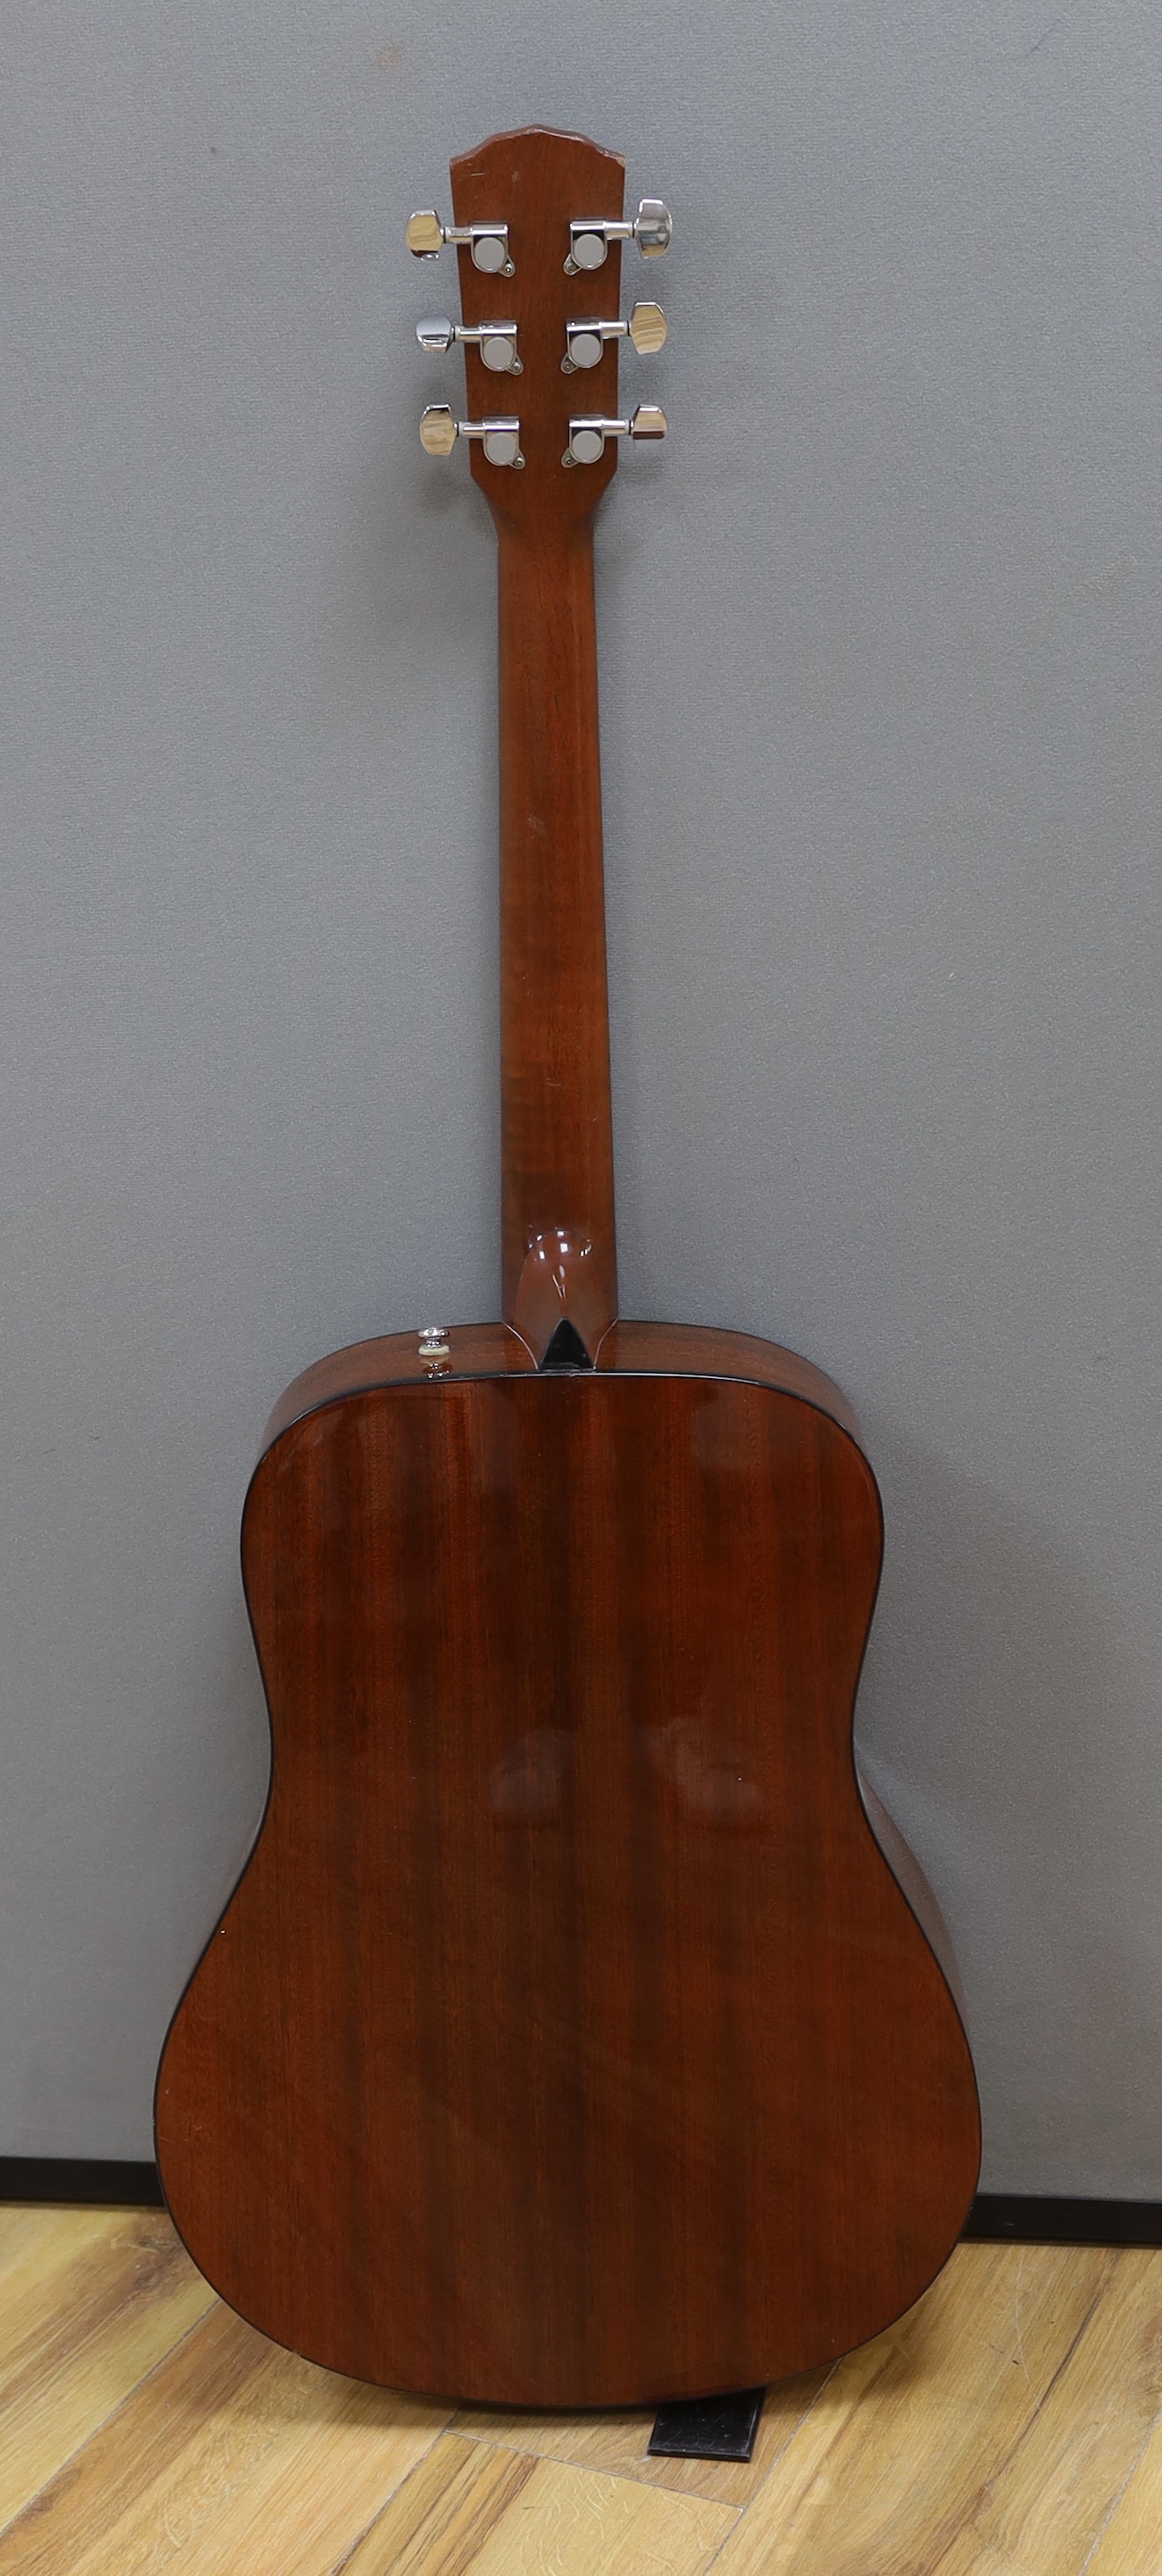 A Fender acoustic left handed guitar, in a hard case